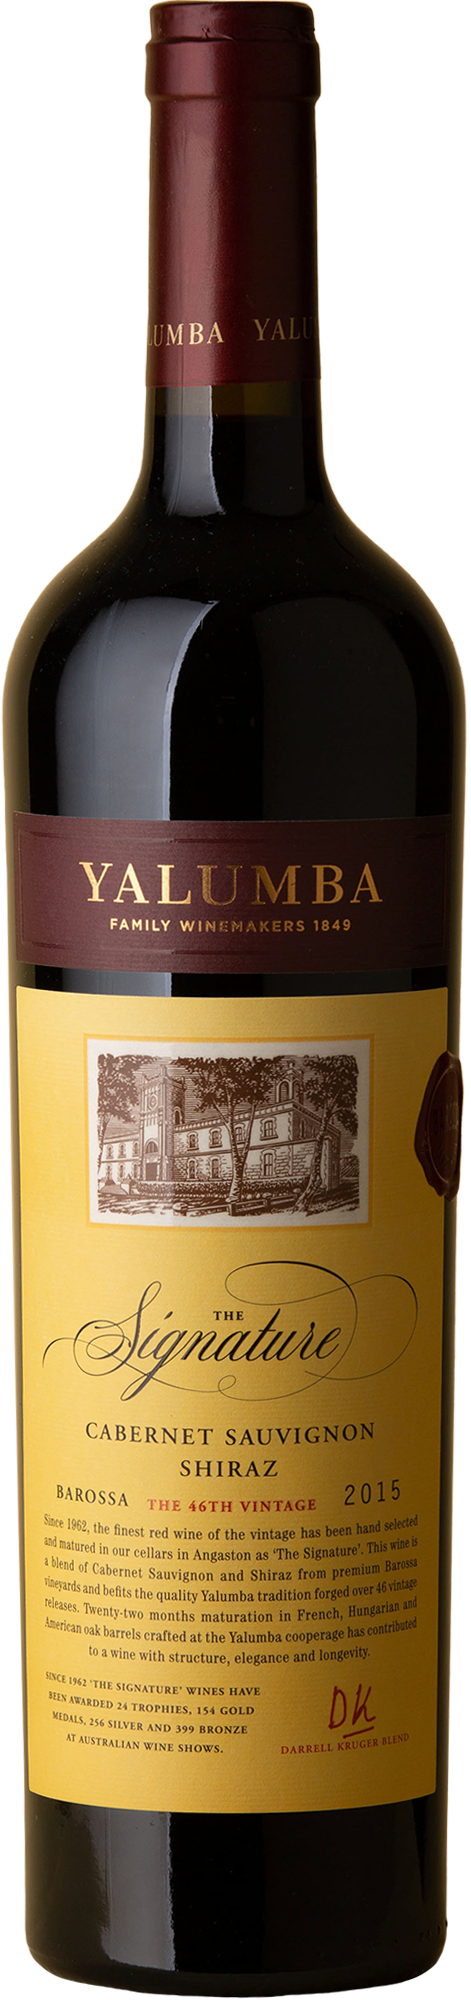 Yalumba - Signature Cabernet Sauvignon / Shiraz 2015 Red Wine